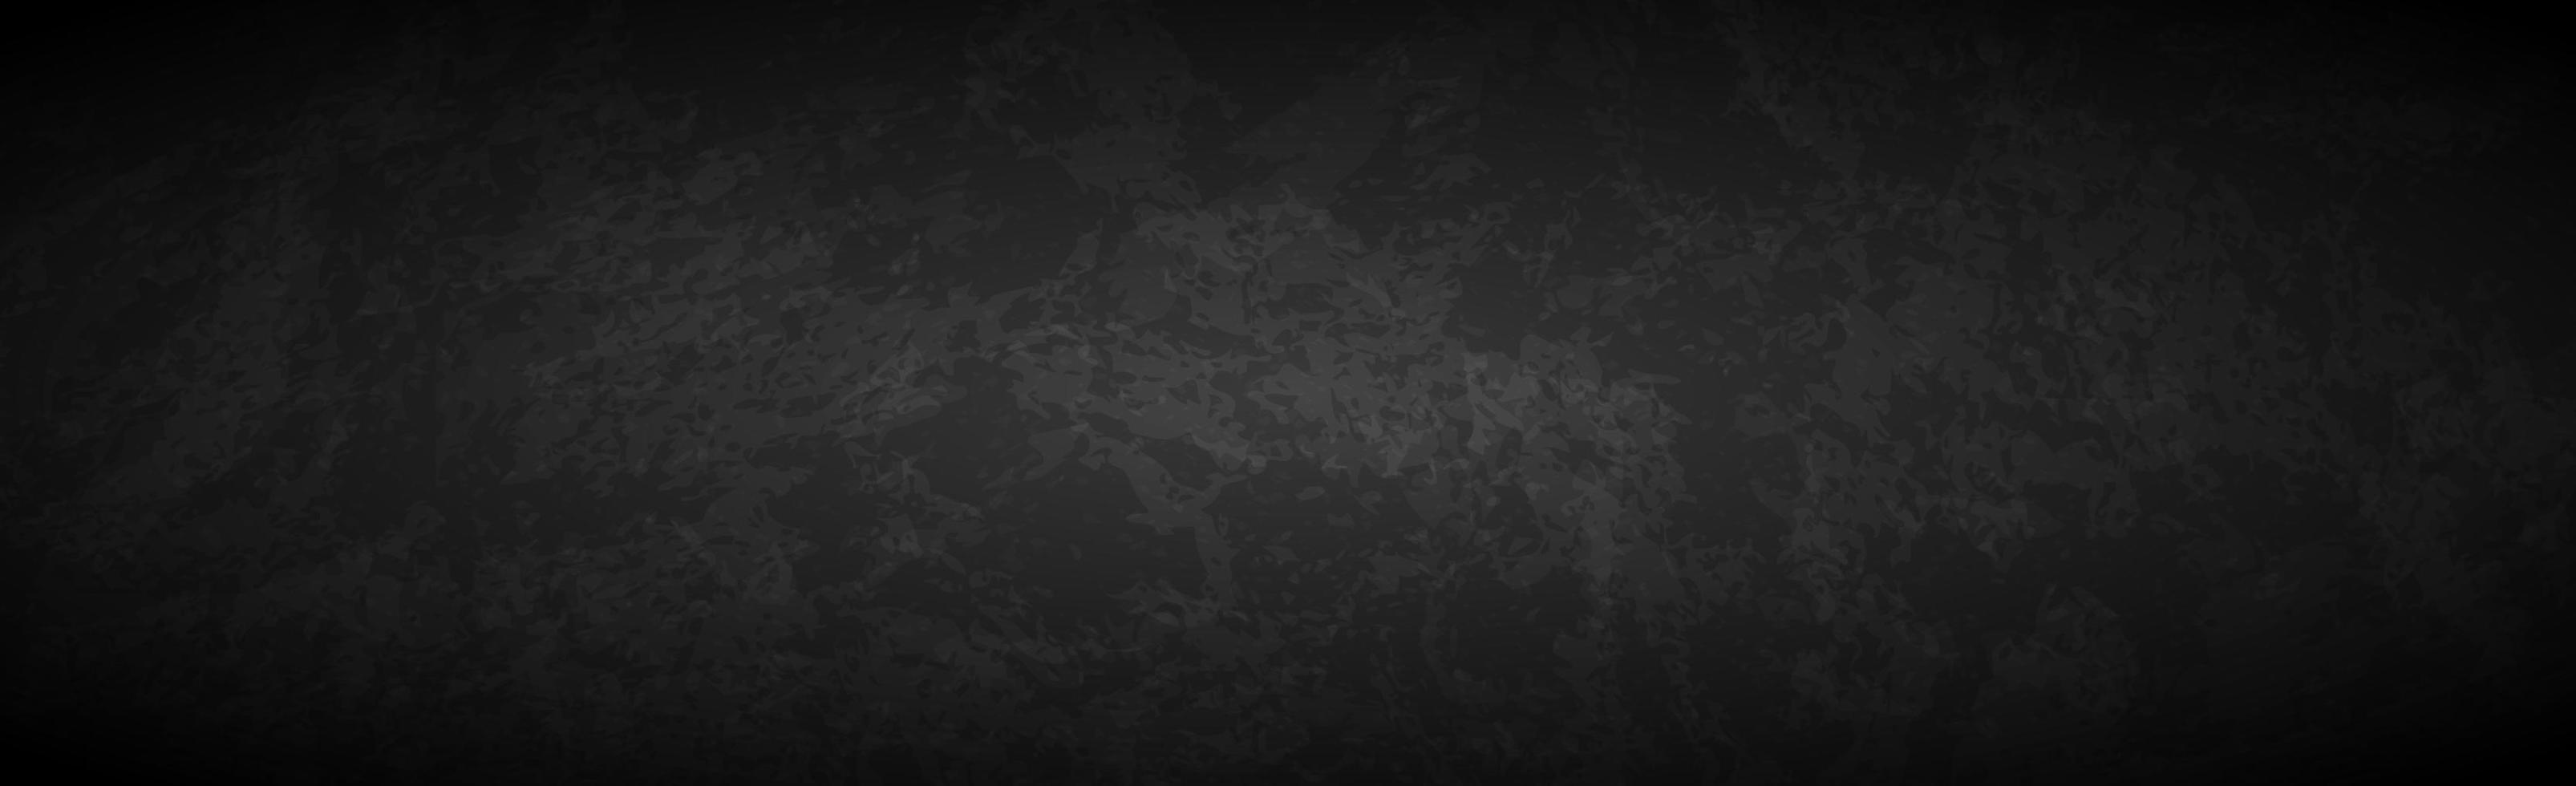 Black panoramic abstract textured dark grunge background - Vector